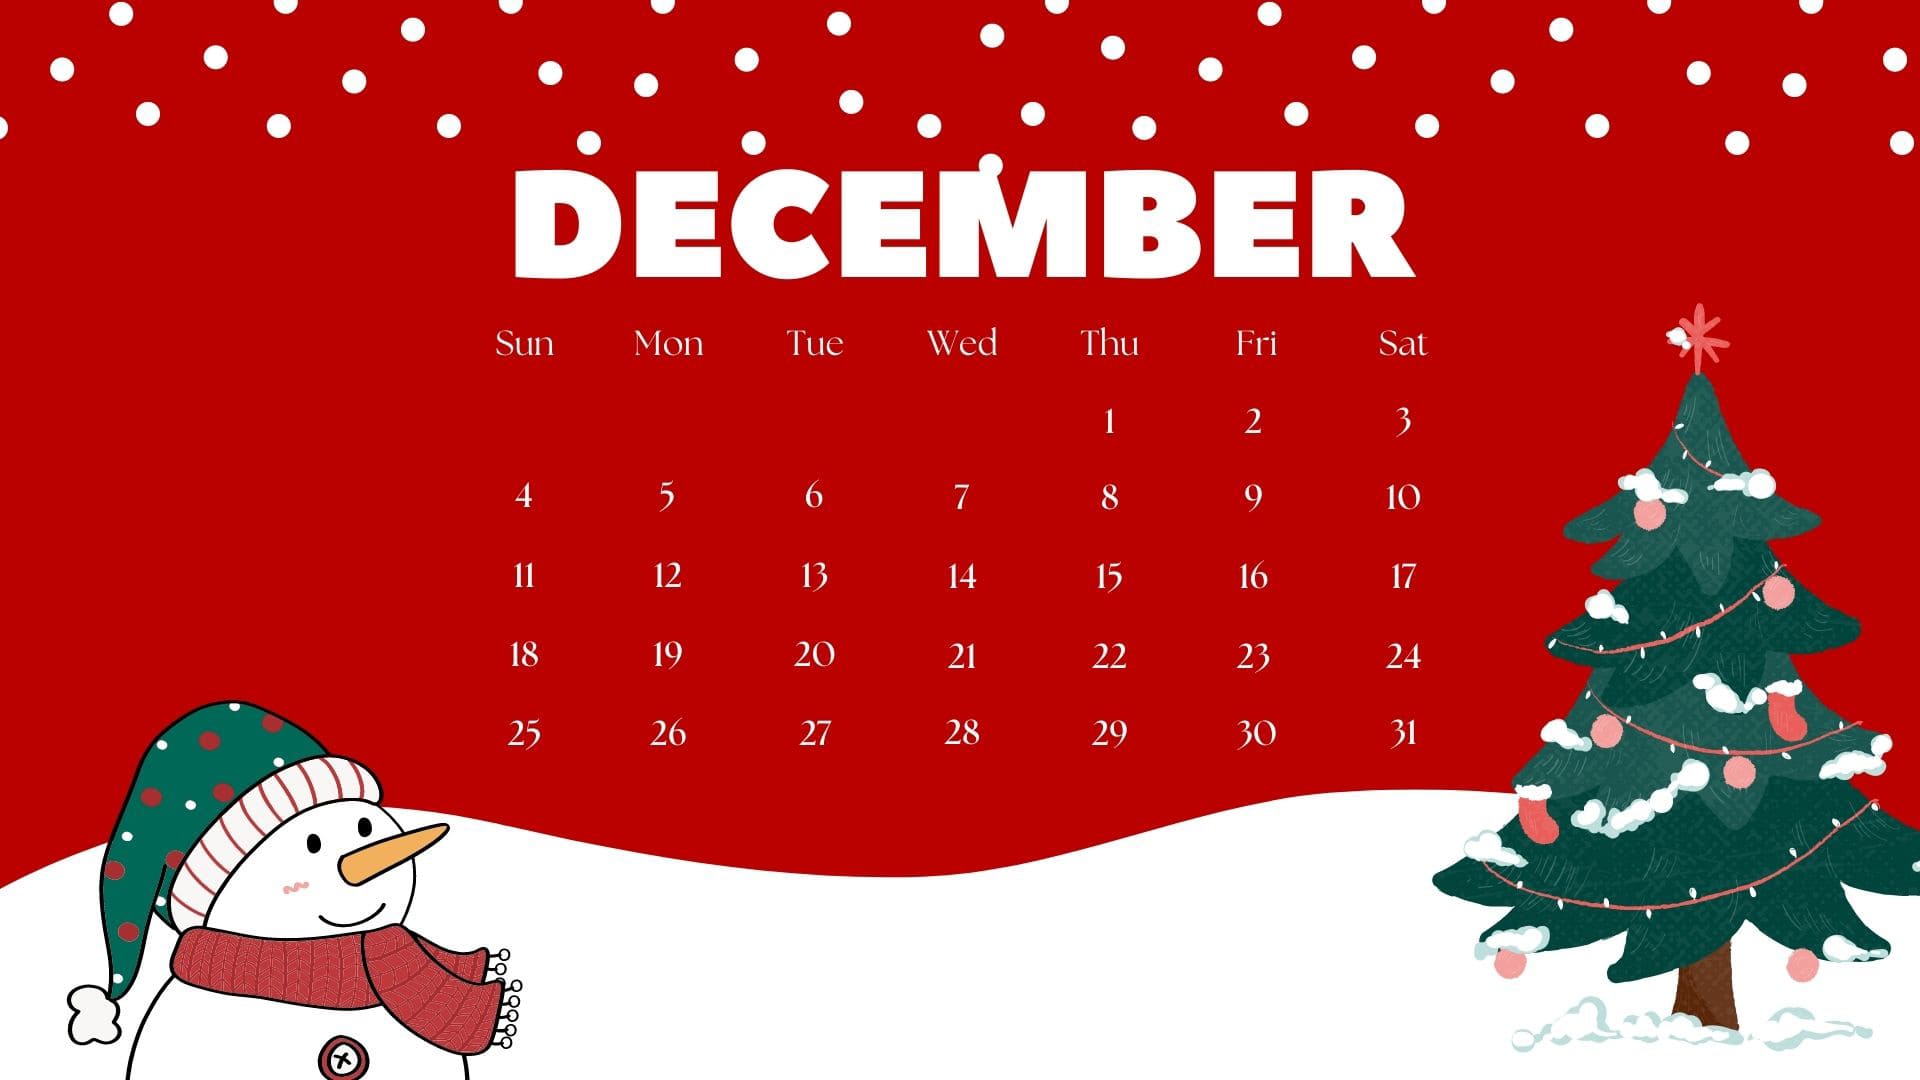 December 2021 Calendar Wallpapers Desktop and Mobile version   PixelsTalkNet